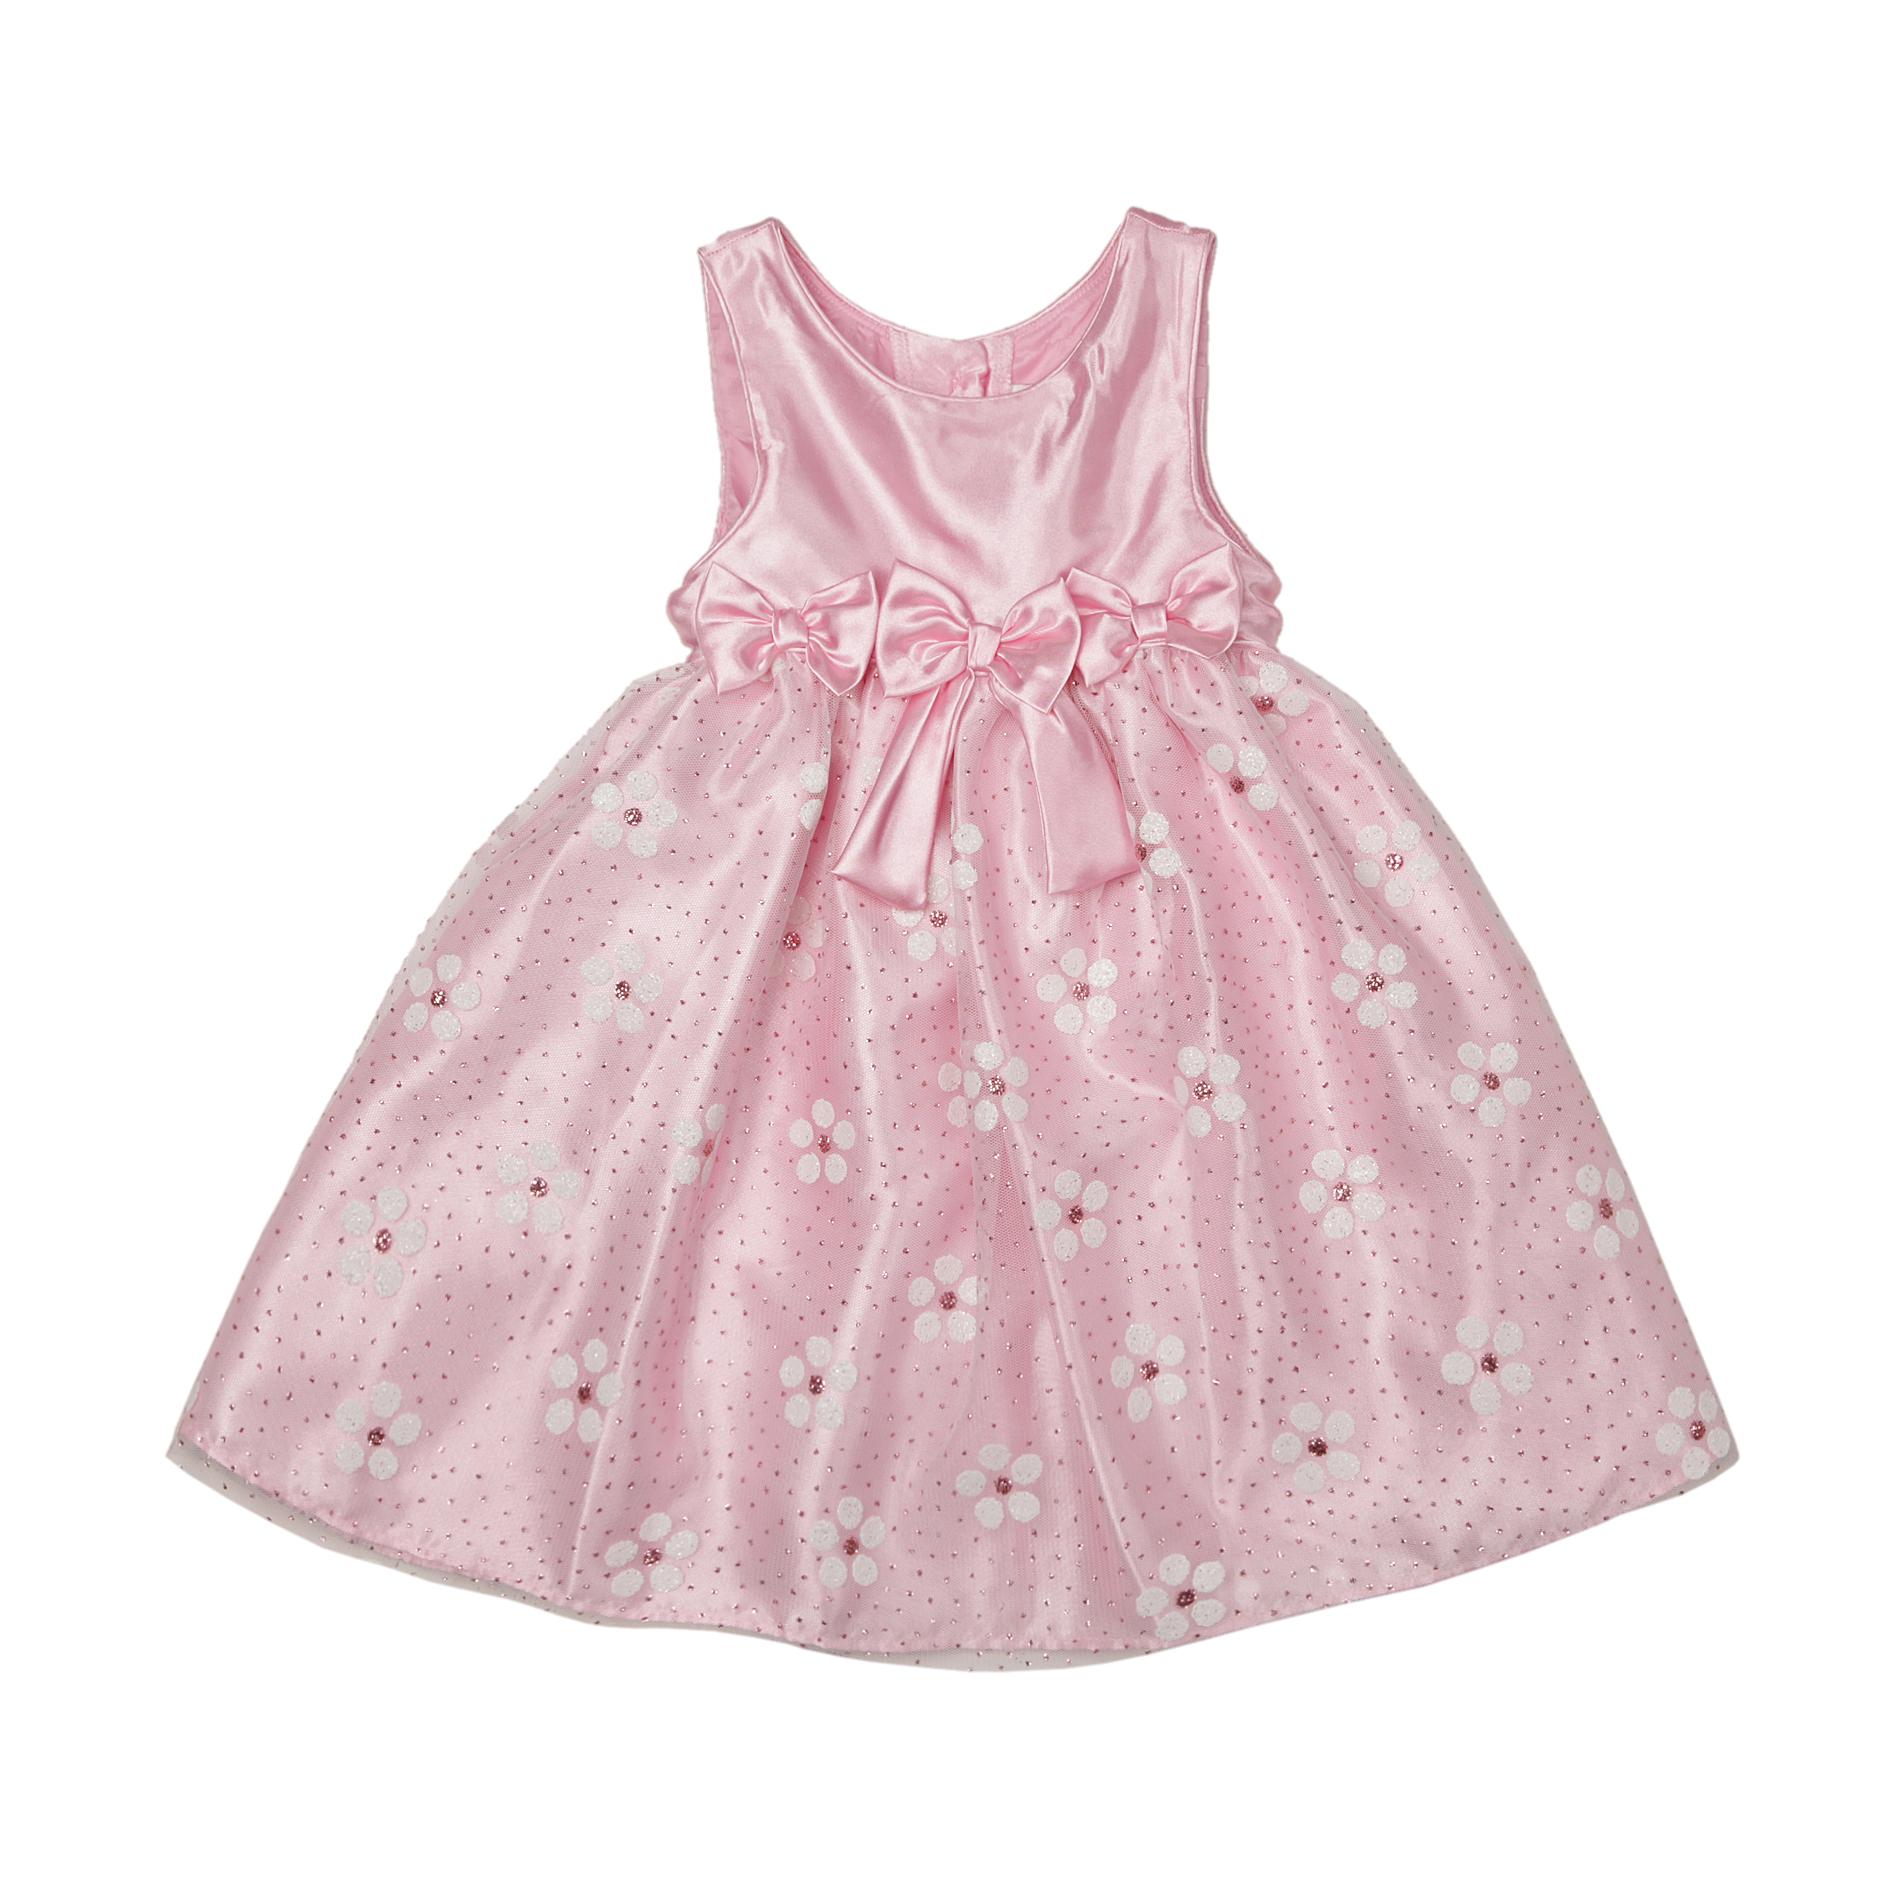 Youngland Toddler Girl's Sleeveless Satin Party Dress - Daisy